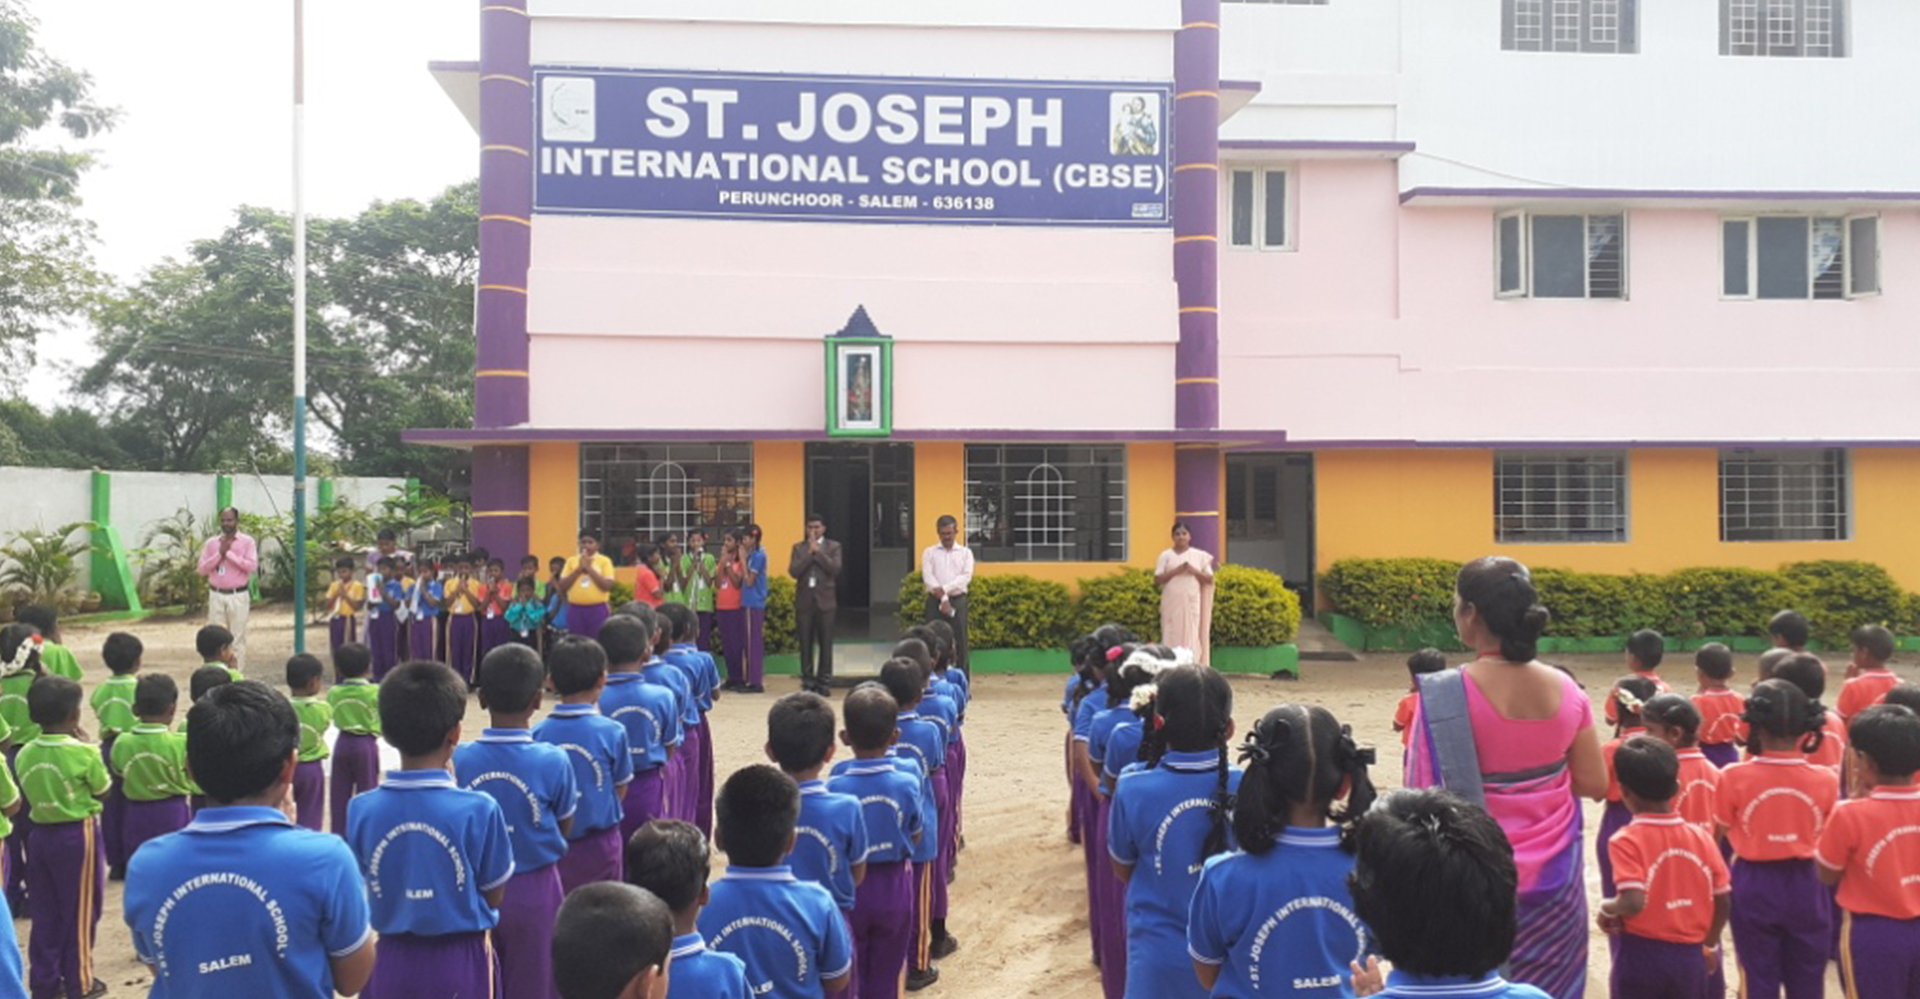 Welcome to St Joseph International School